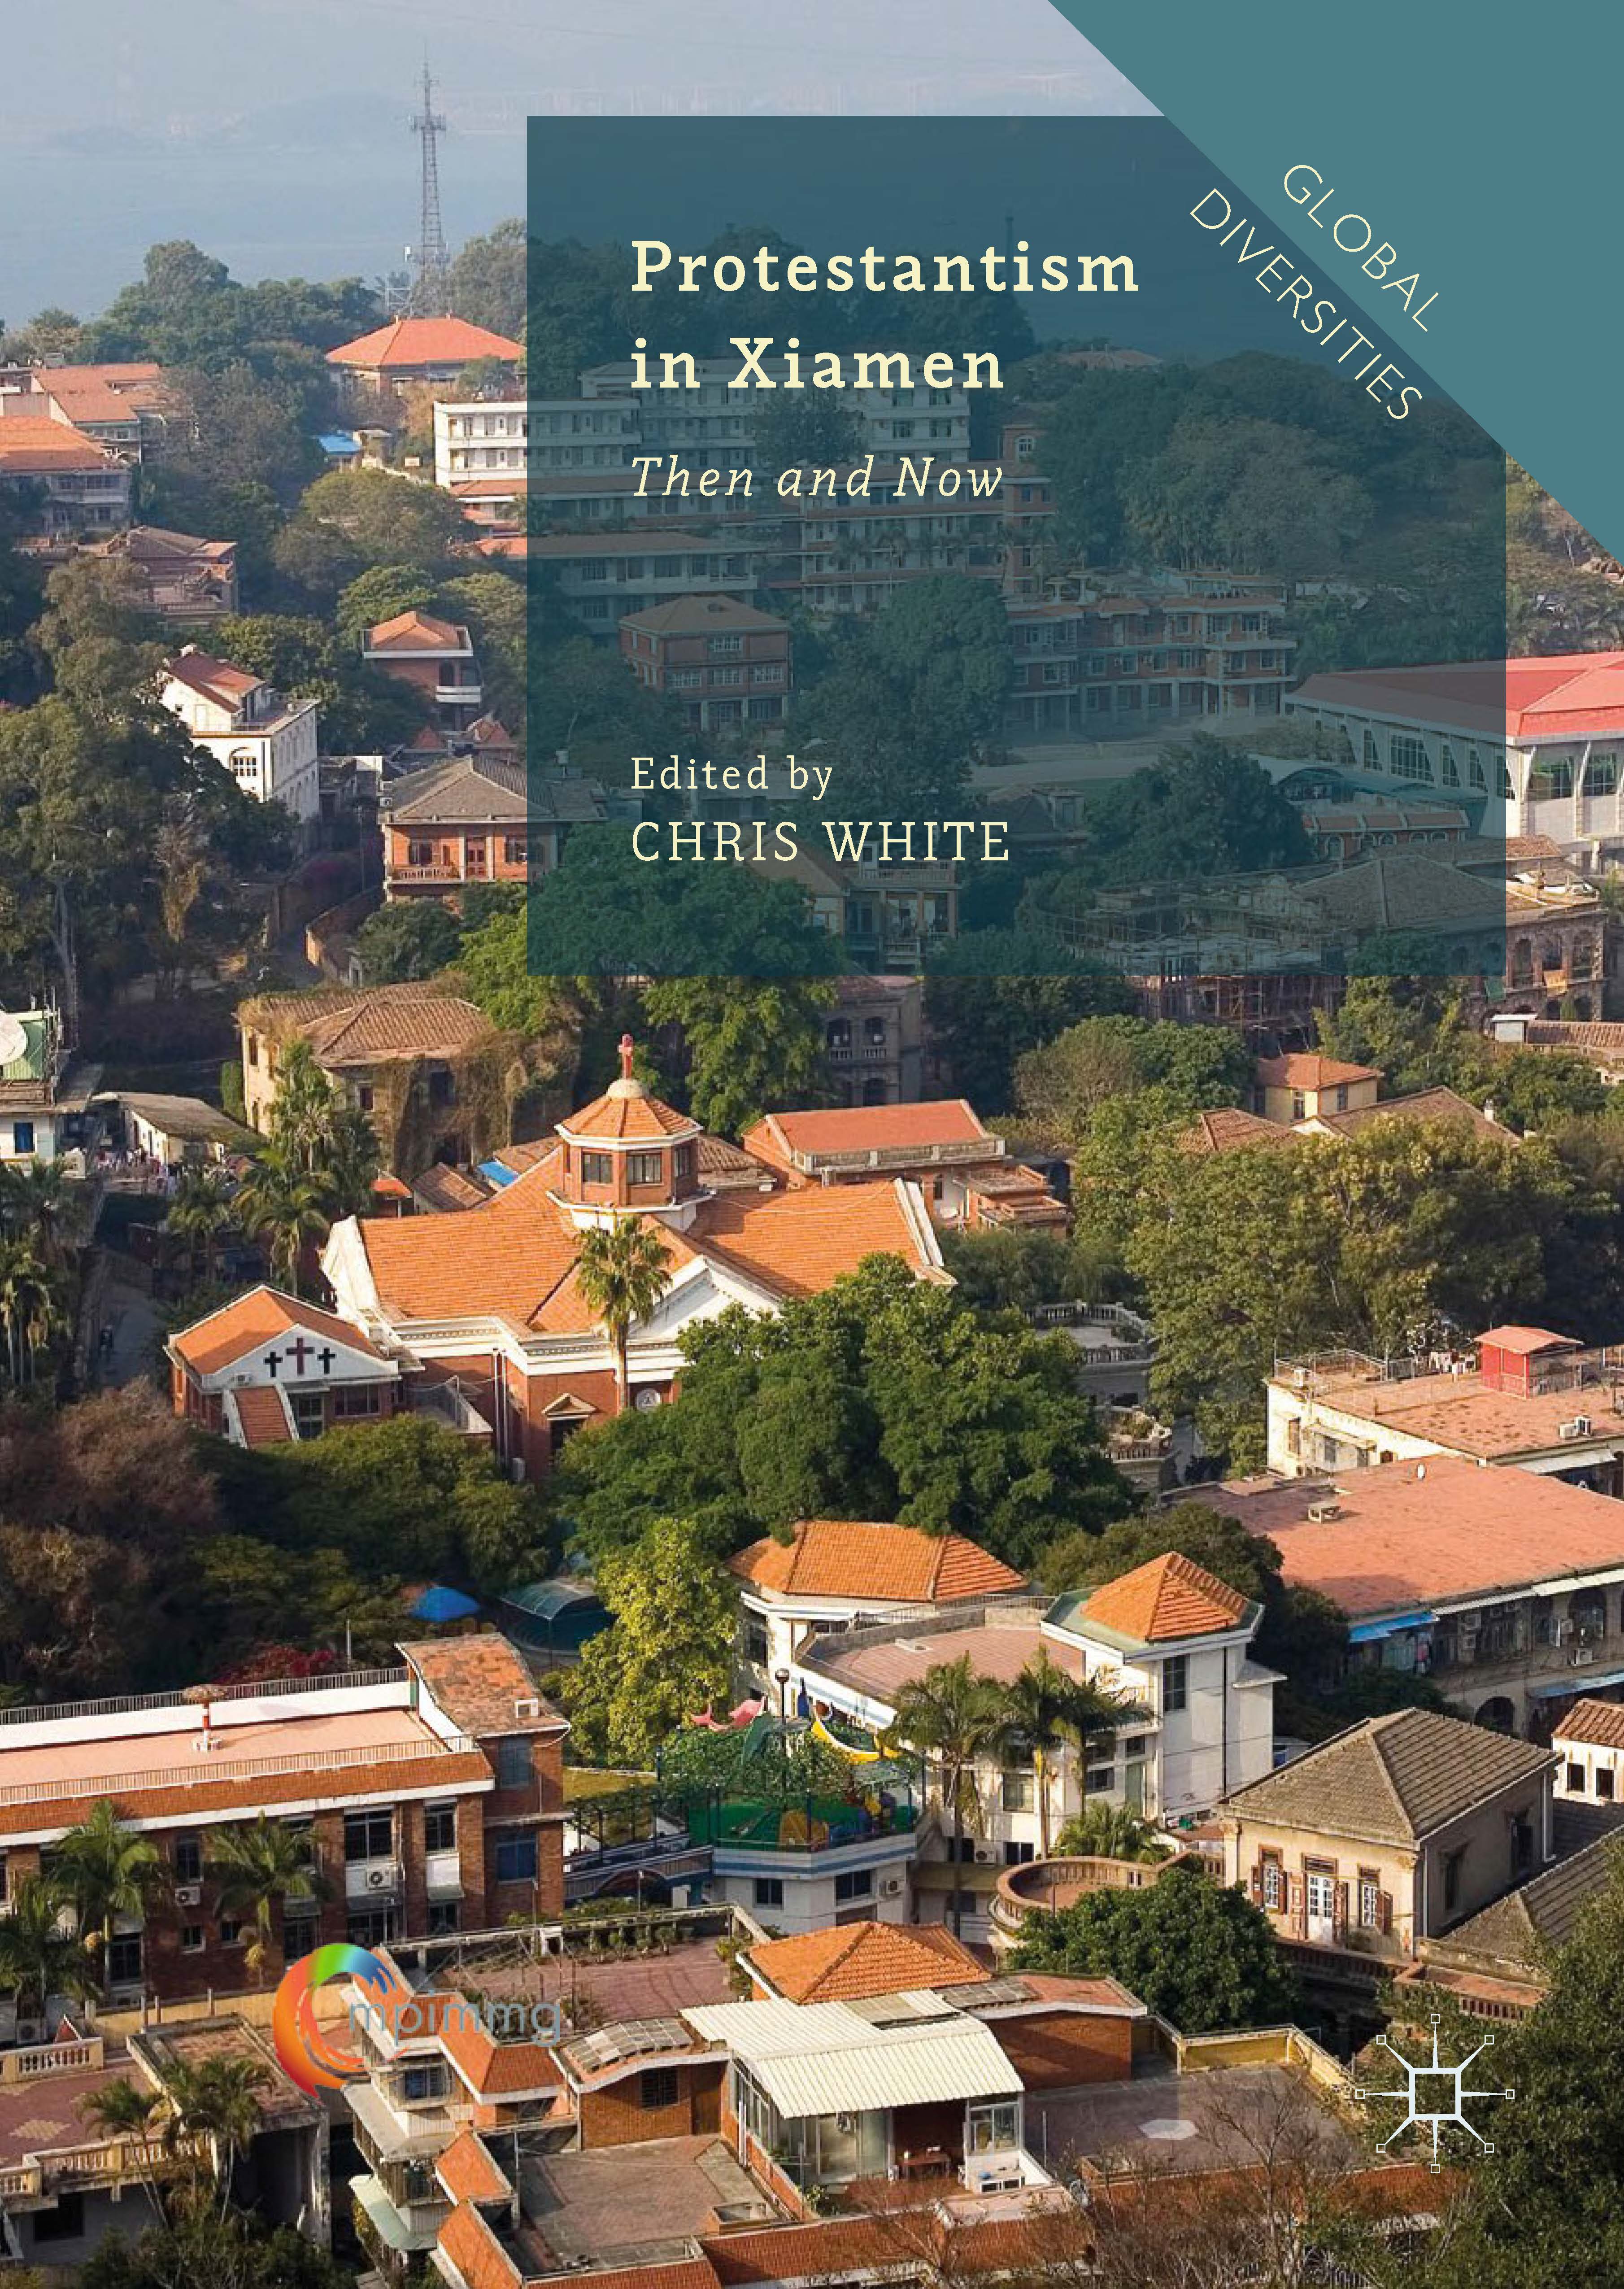 页面提取自－2019_Book_Protestantism in Xiamen.jpg